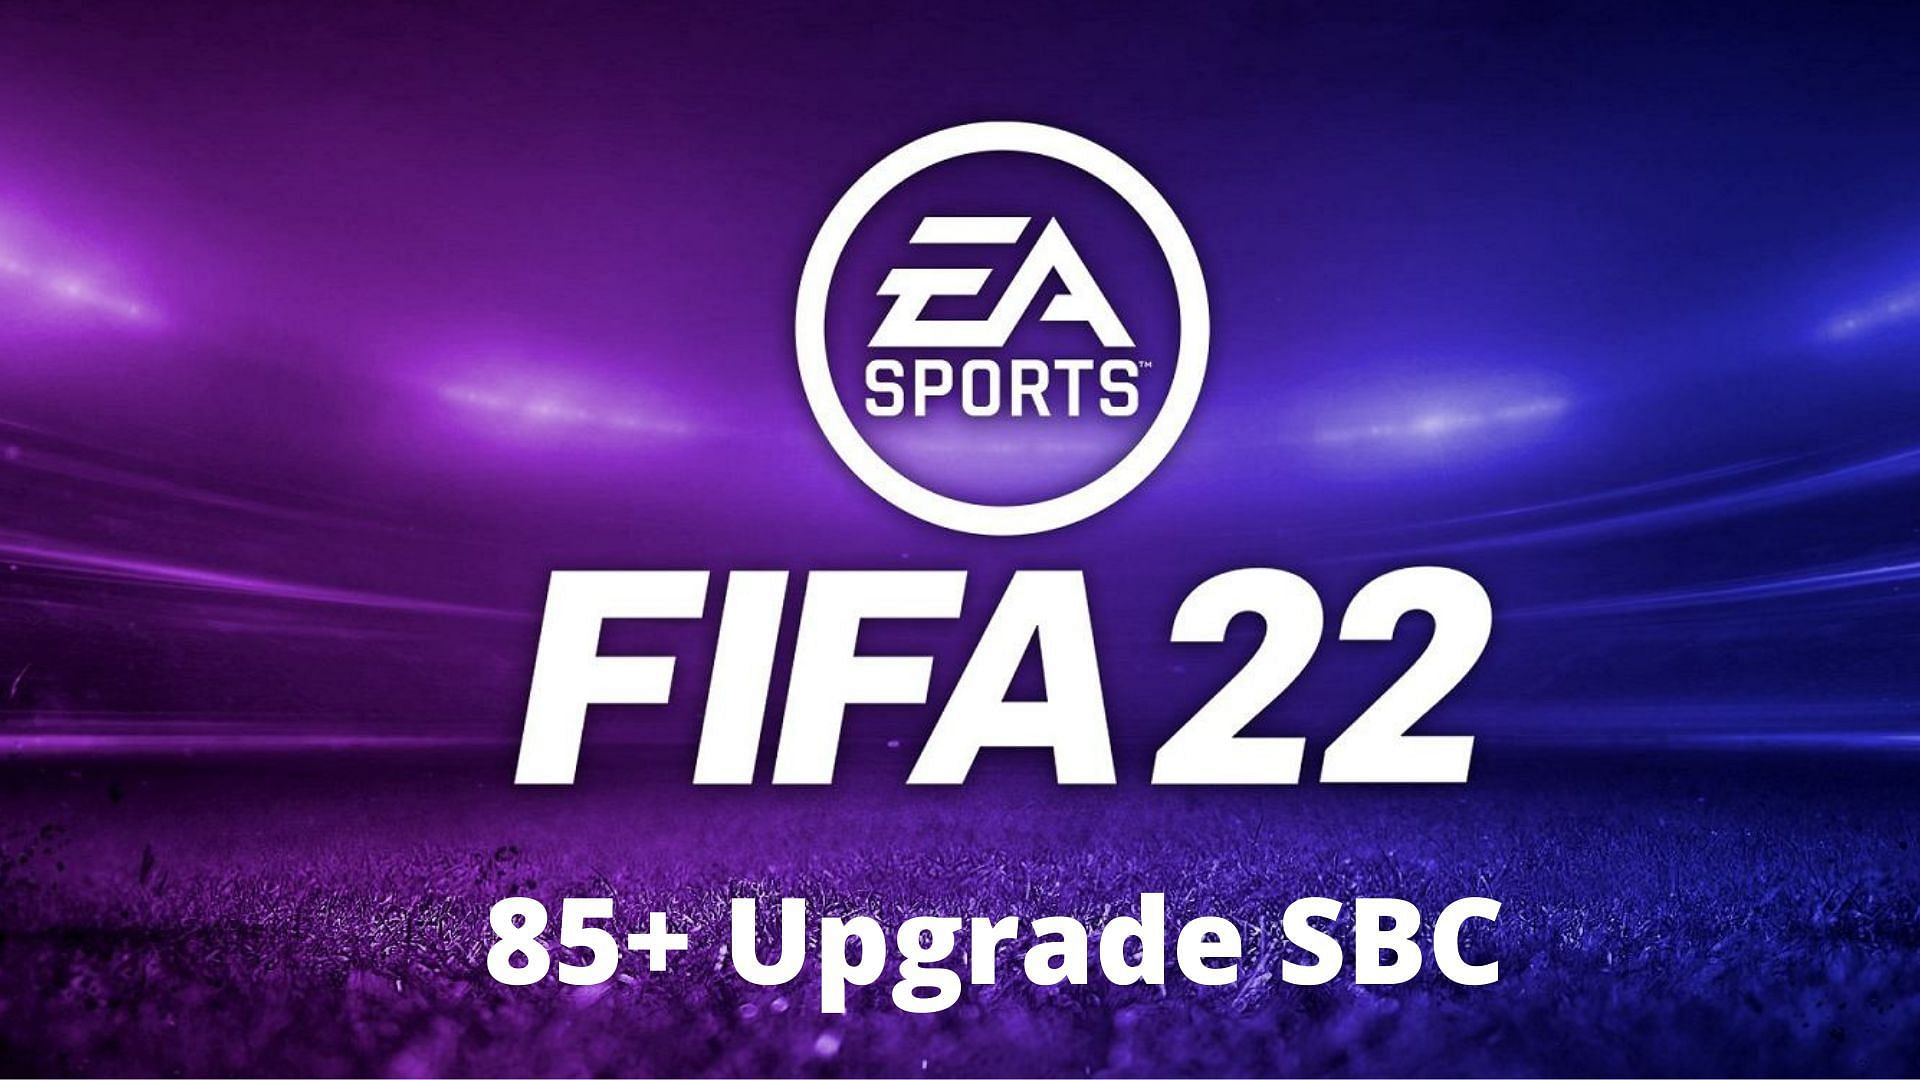 85+ upgrade SBC is live in FIFA 22 Ultimate Team (Image via Sportskeeda)